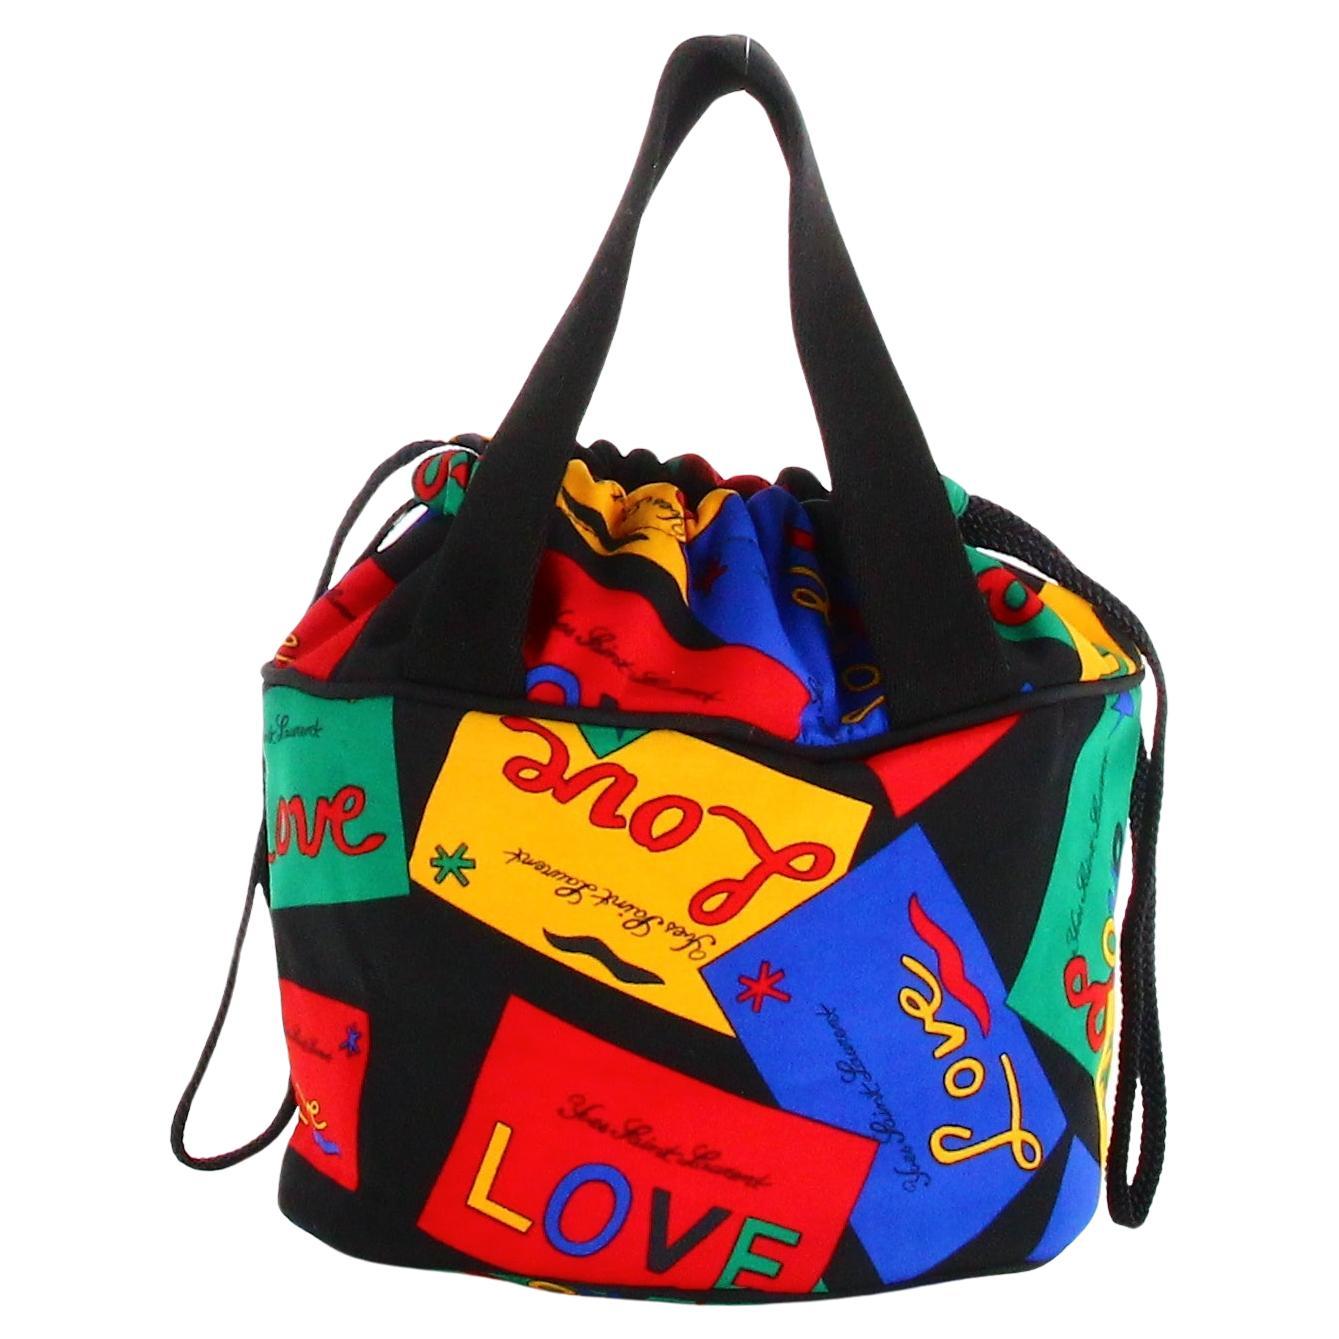 Yves Saint Laurent Tricolor Monogram Mini Handbag For Sale